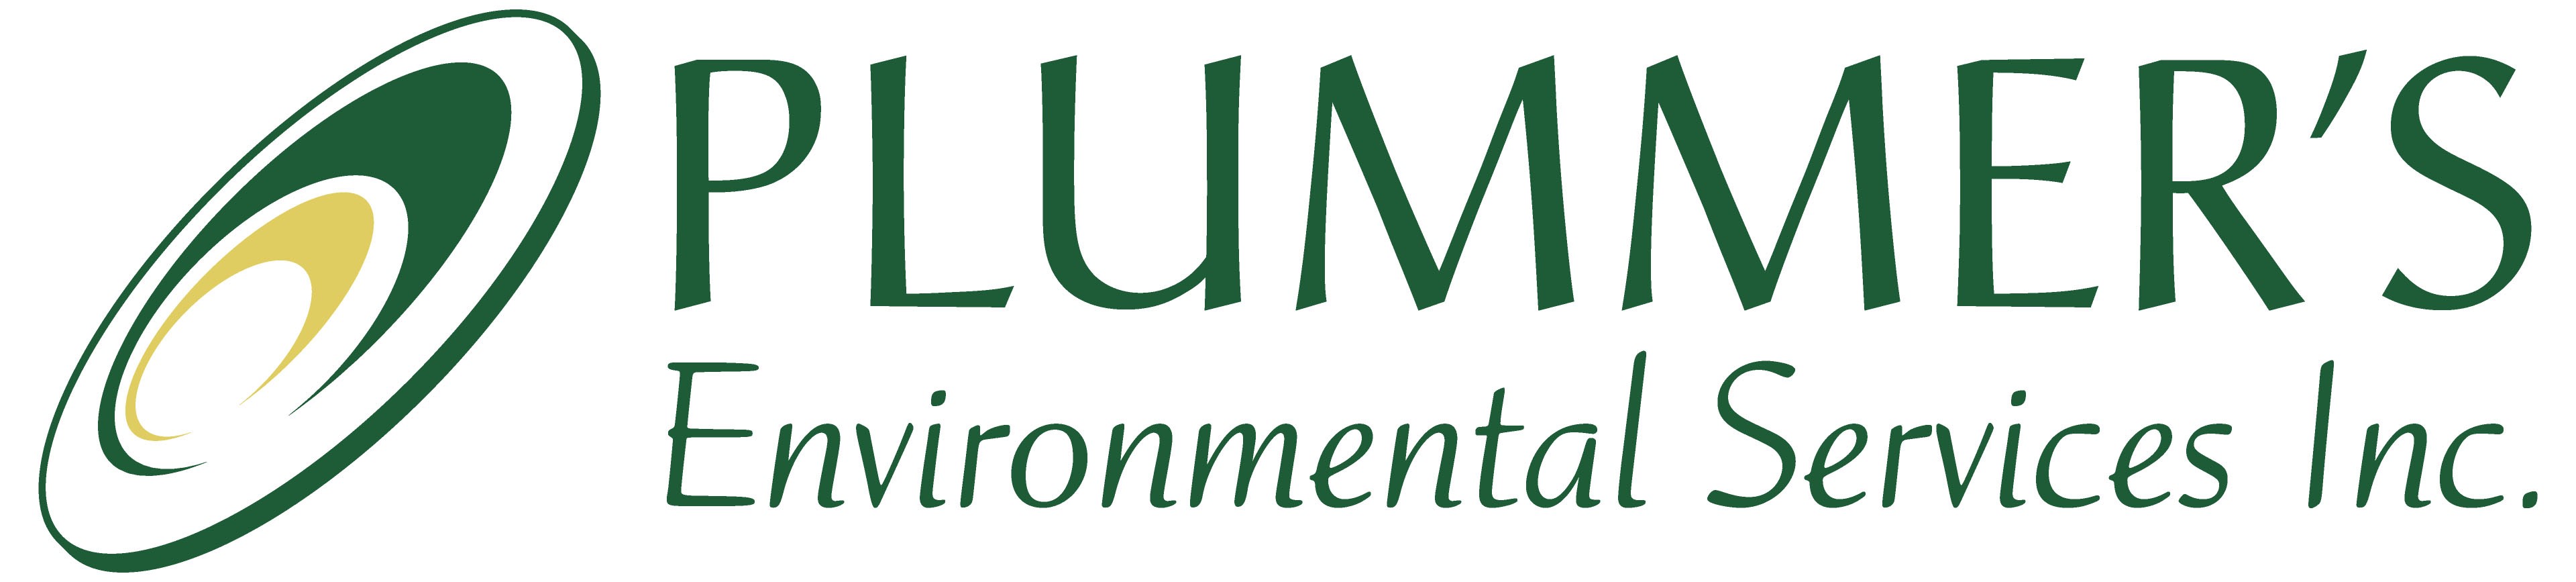 Plummer's Environmental Services, Inc.